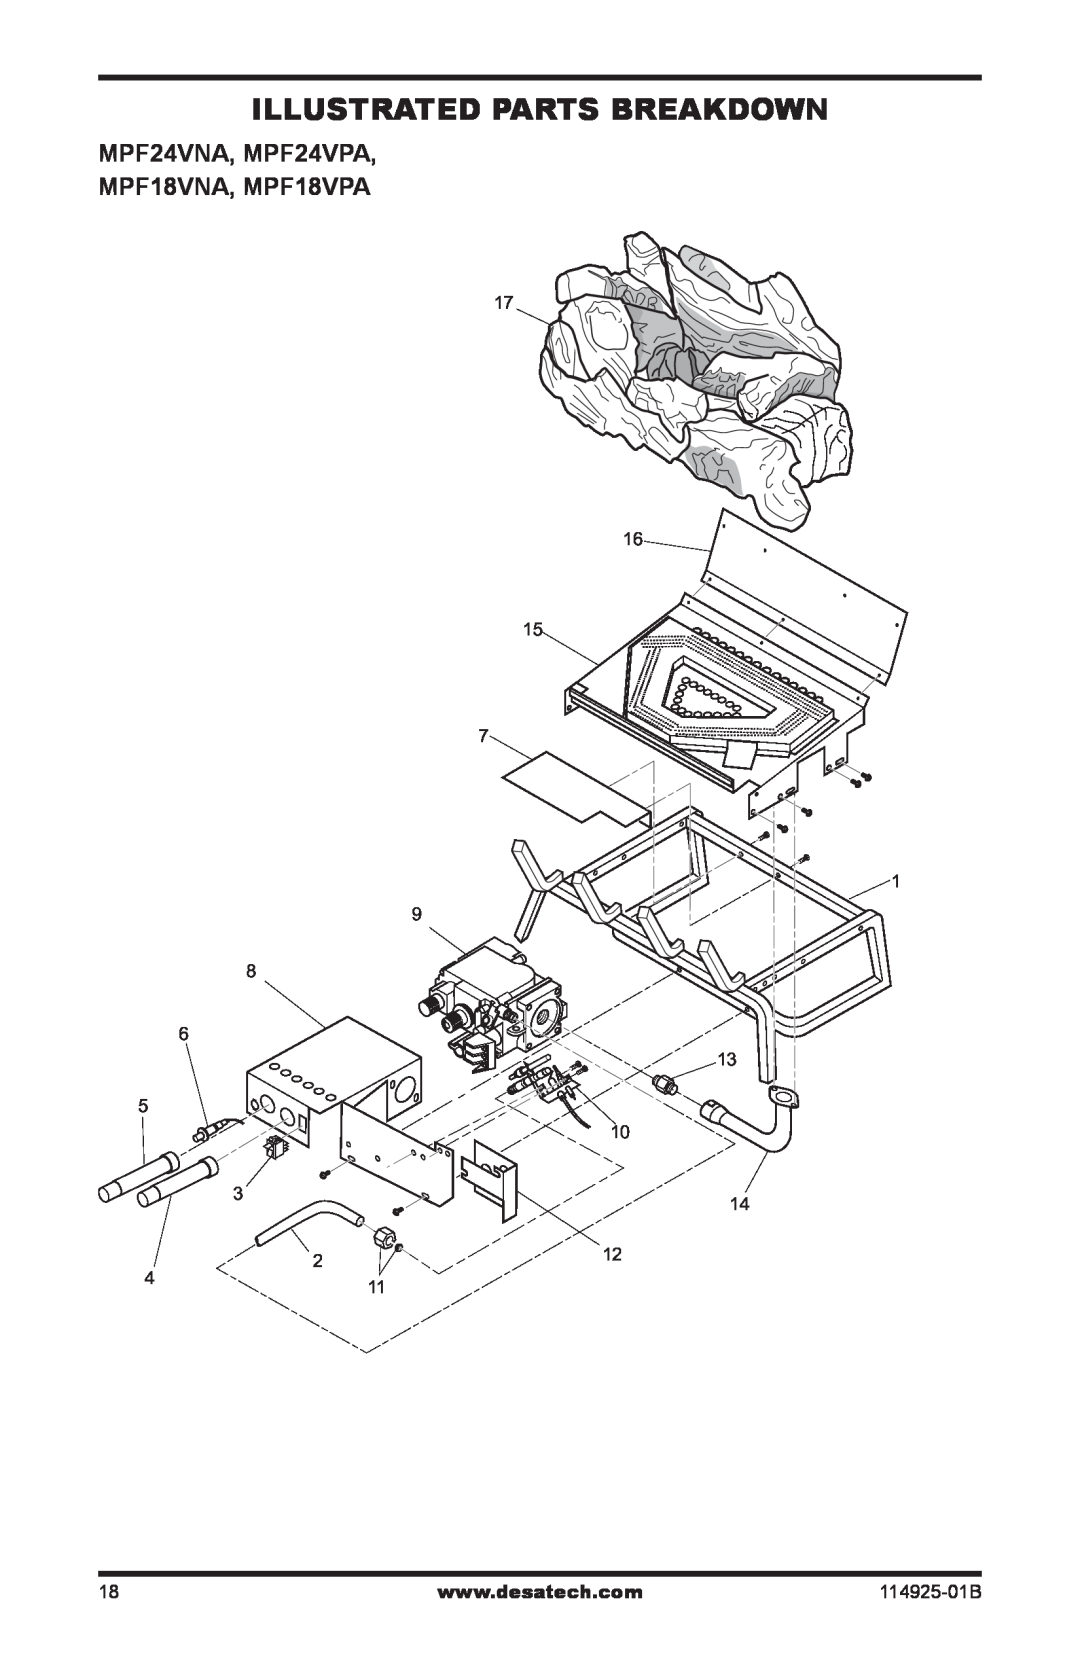 Desa installation manual Illustrated Parts Breakdown, MPF24VNA, MPF24VPA MPF18VNA, MPF18VPA 